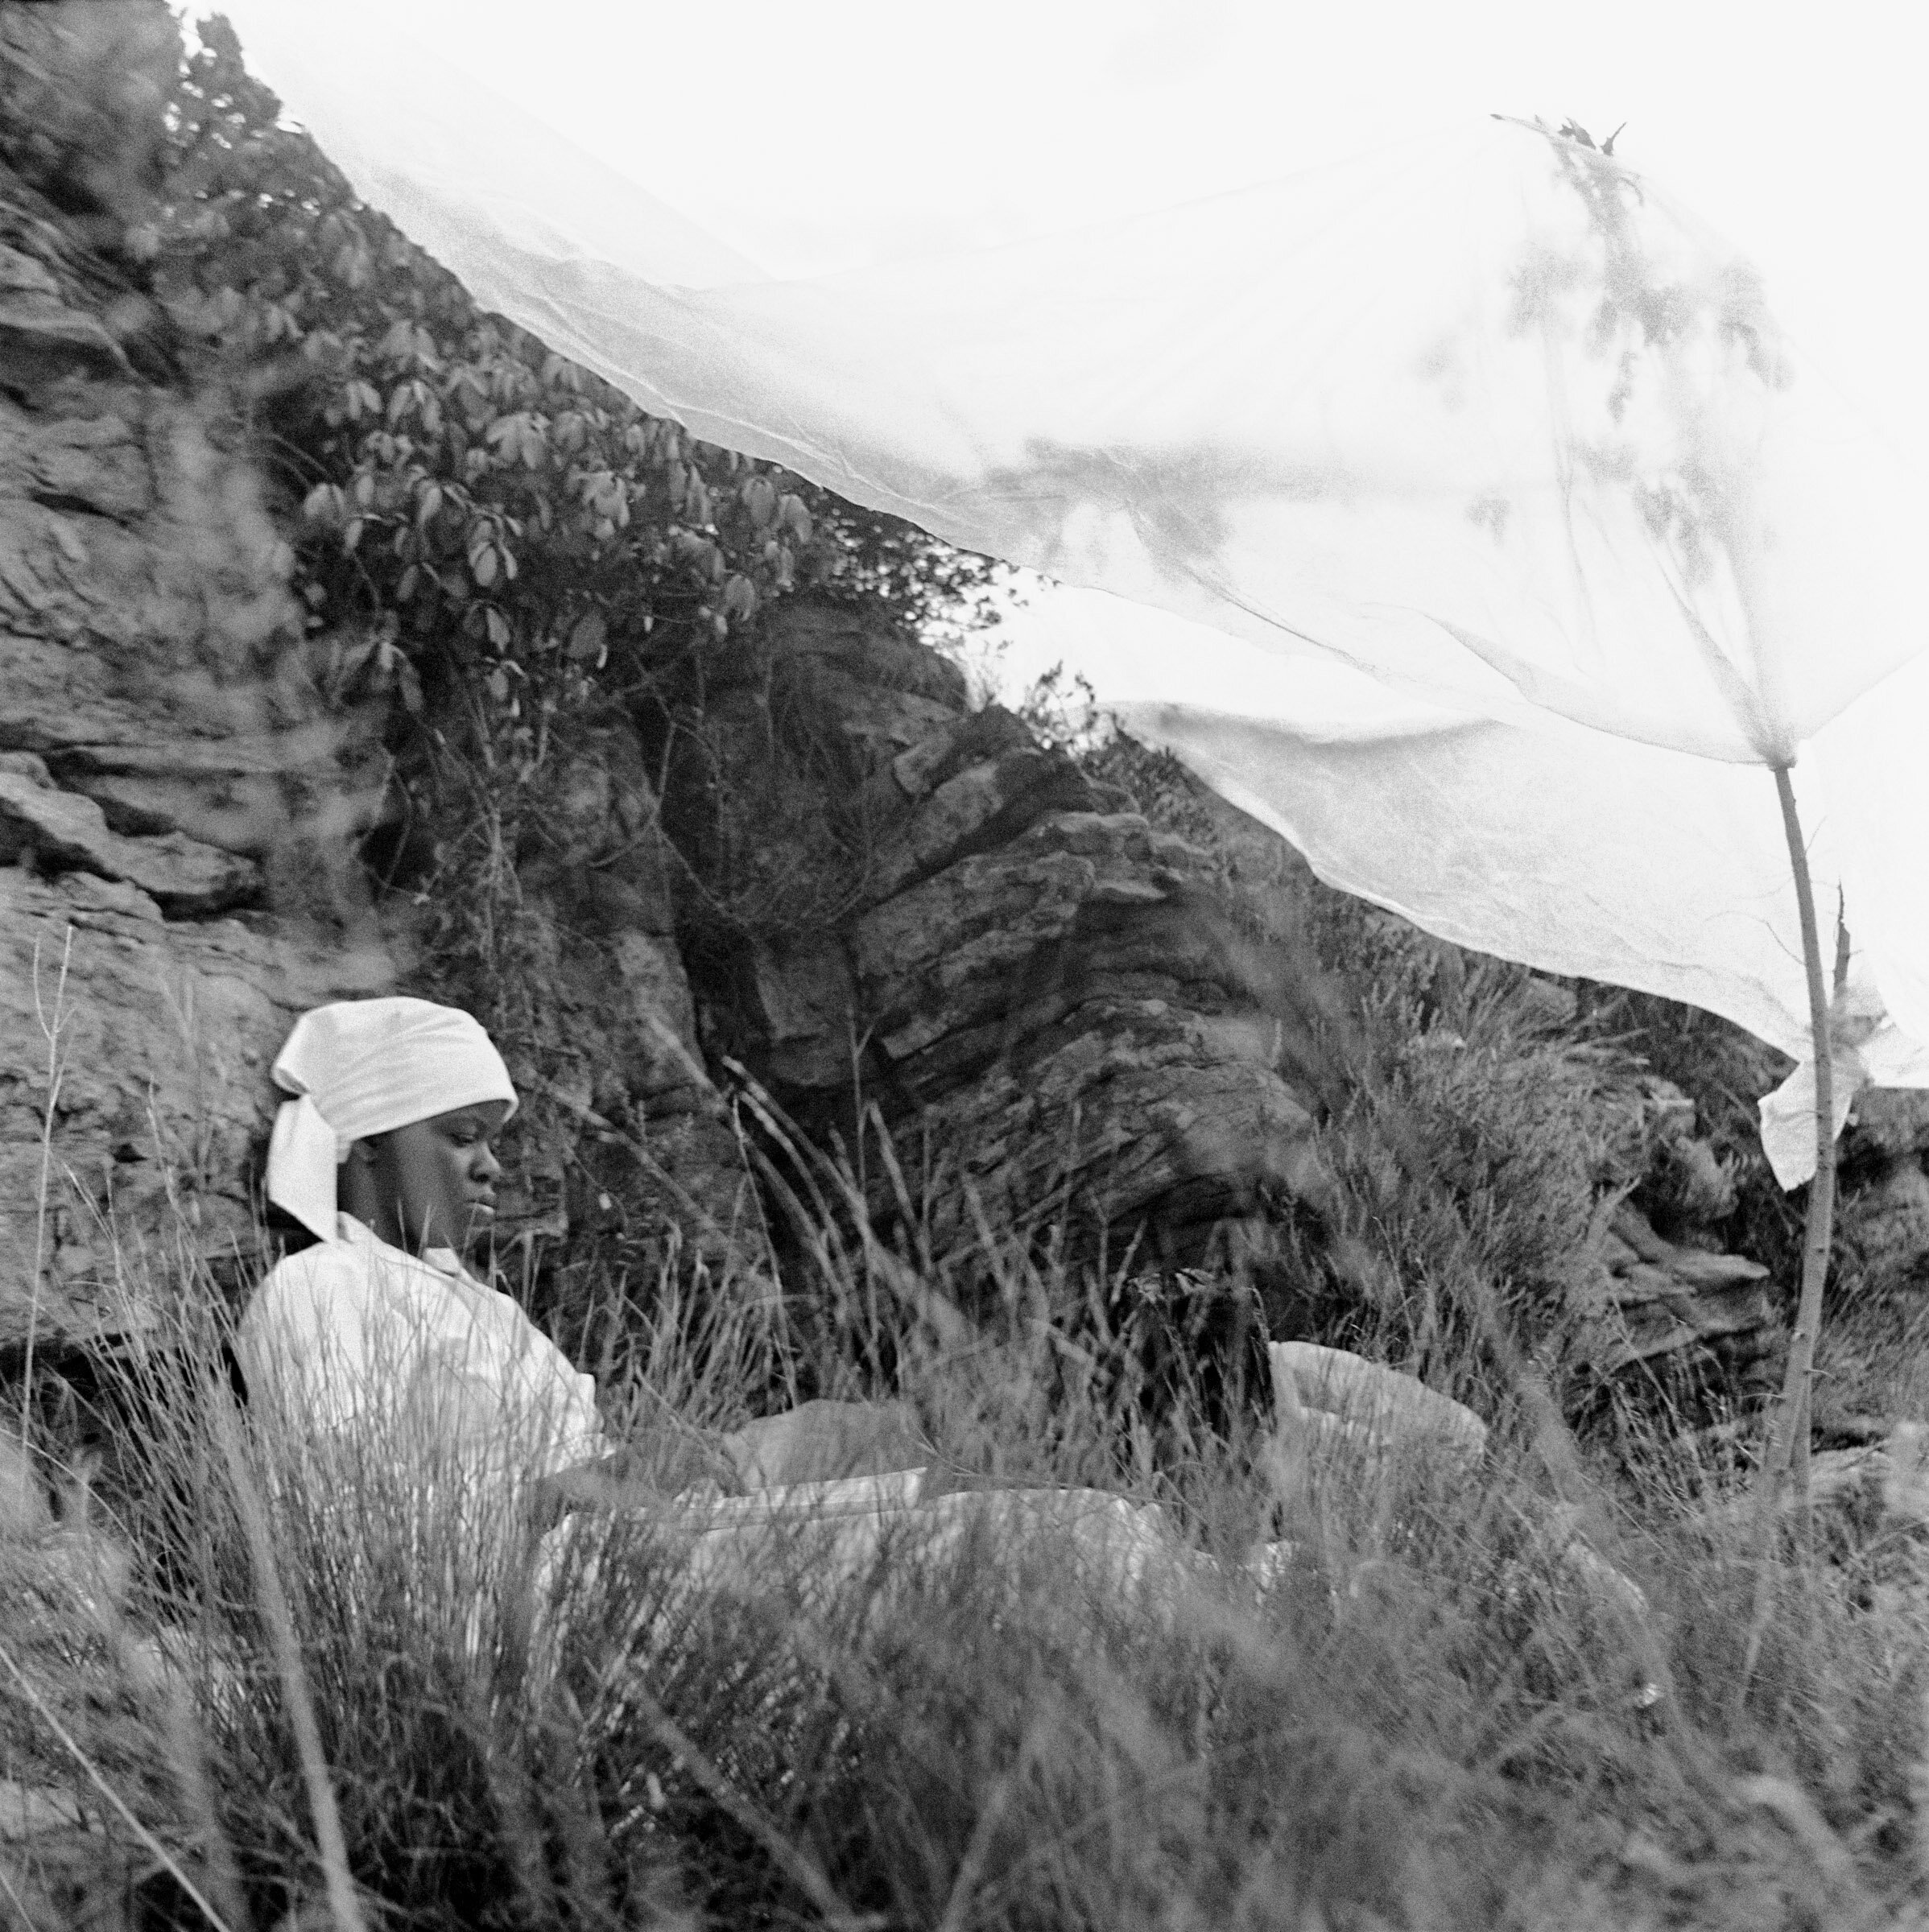  A female member of a Zioni sect reads a bible under a shelter of plastic sheet alongside rocks on Melville Koppie, Johannesburg, South Africa, 2007. photo Greg Marinovich 